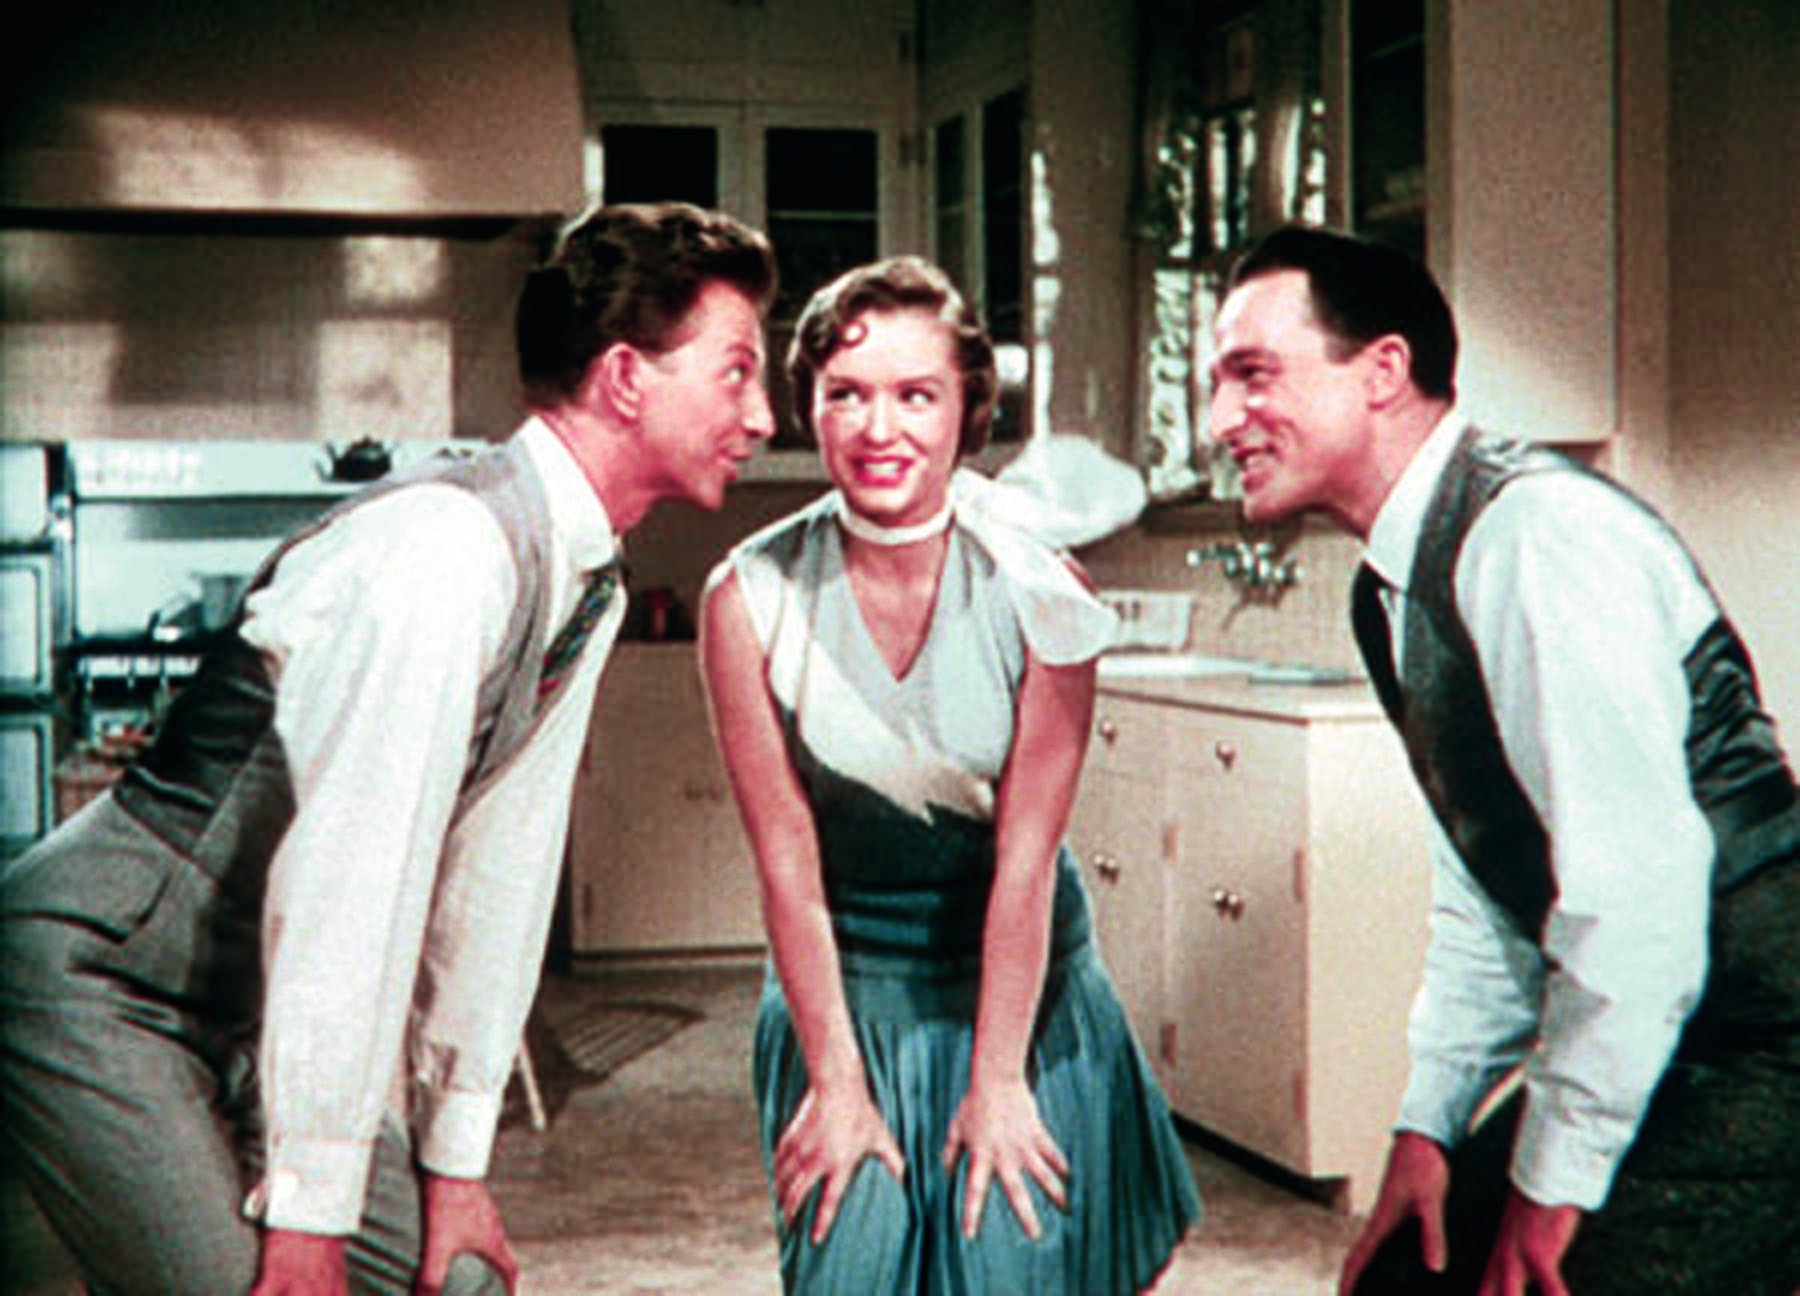 Still of Gene Kelly, Debbie Reynolds and Donald O'Connor in Singin' in the Rain (1952)